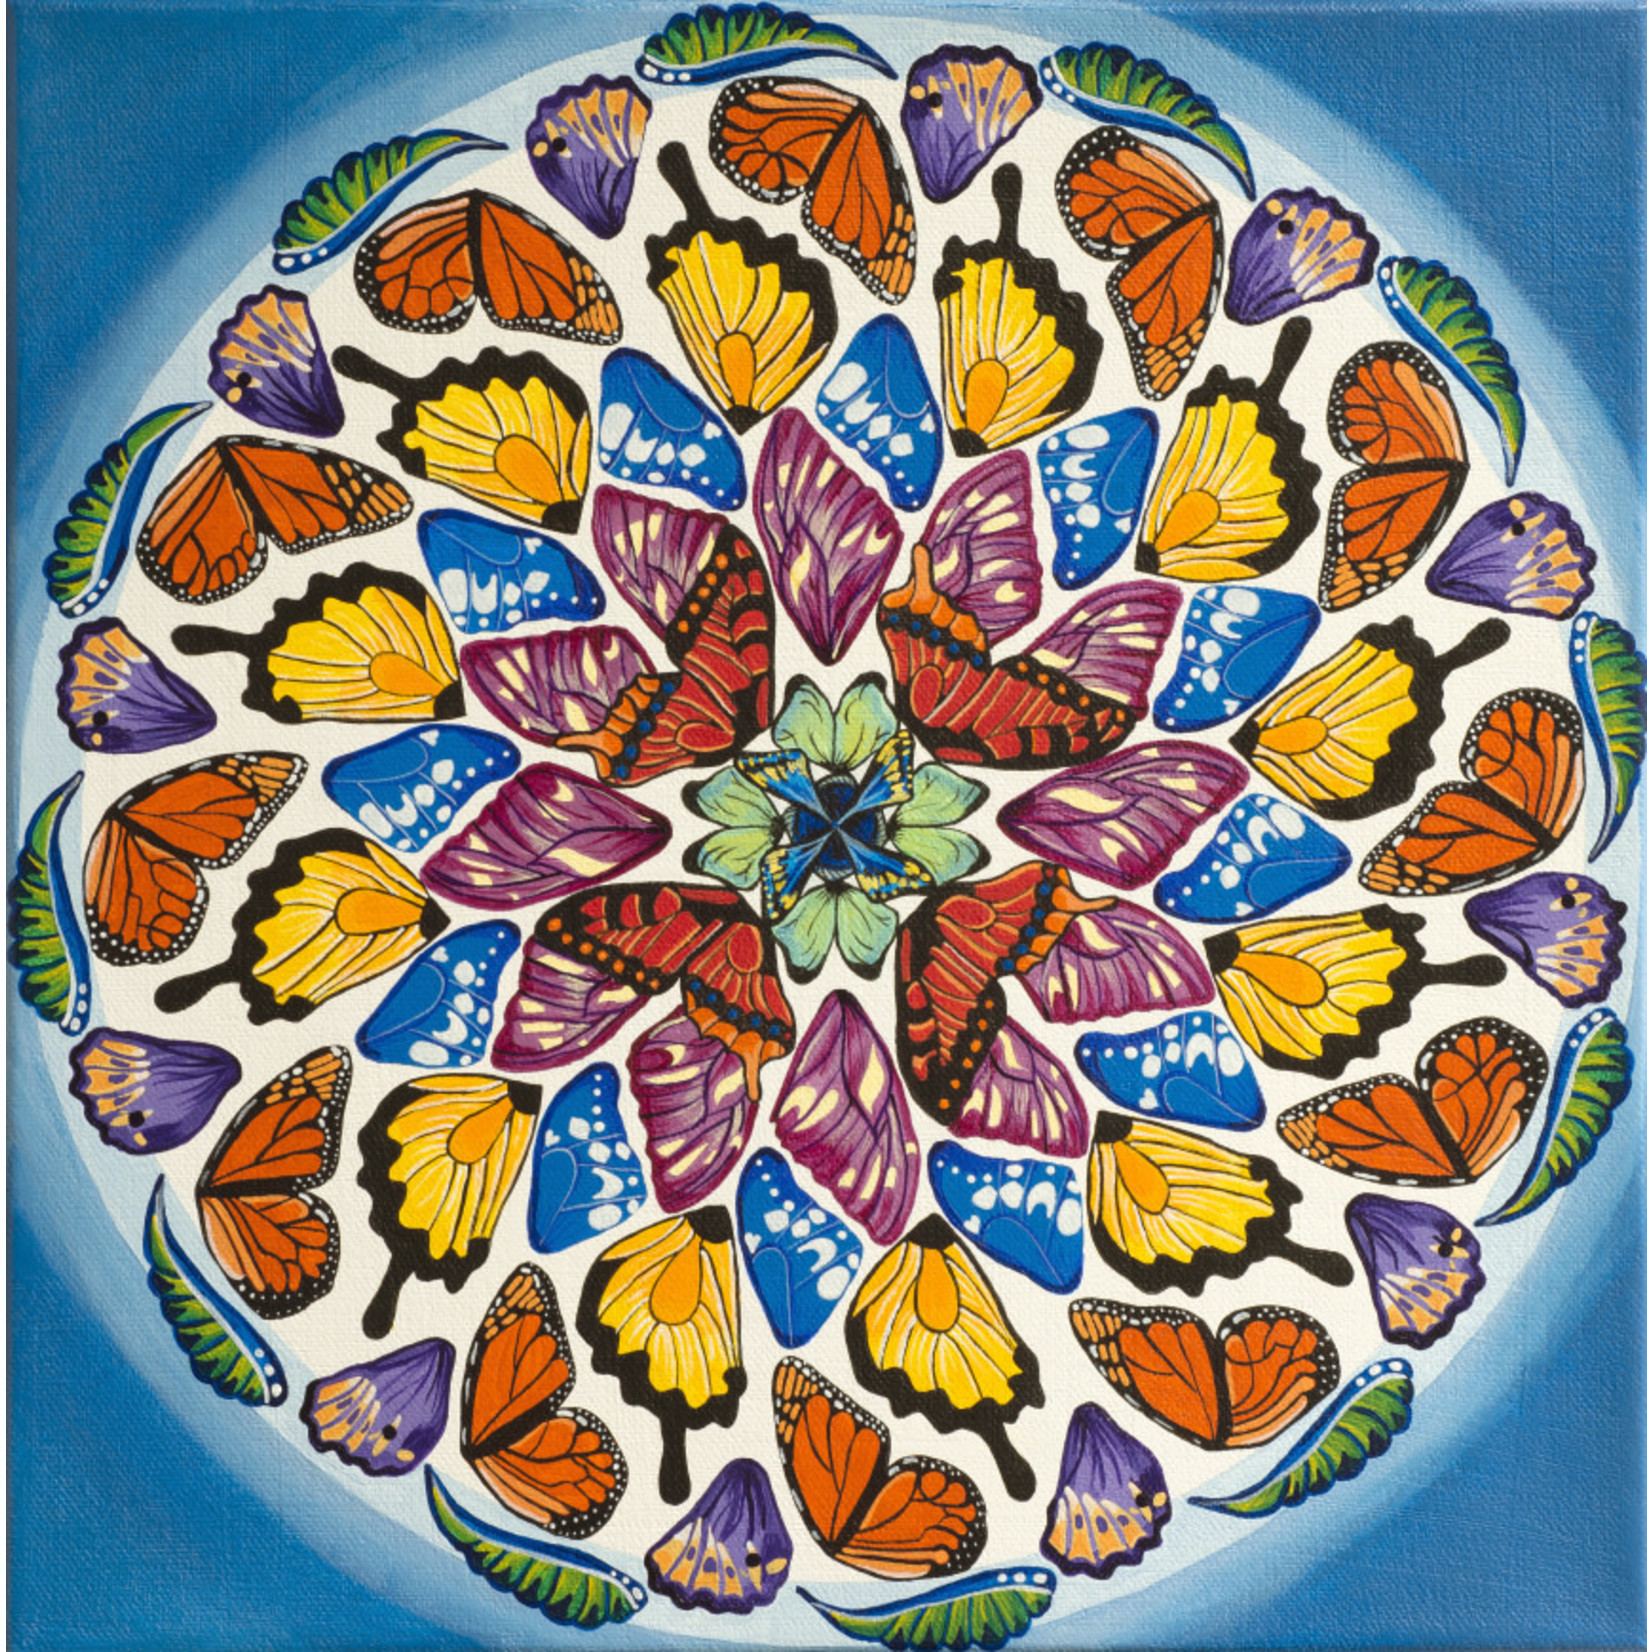 Stirling Studios "Butterflies" Mandala Canvas Print